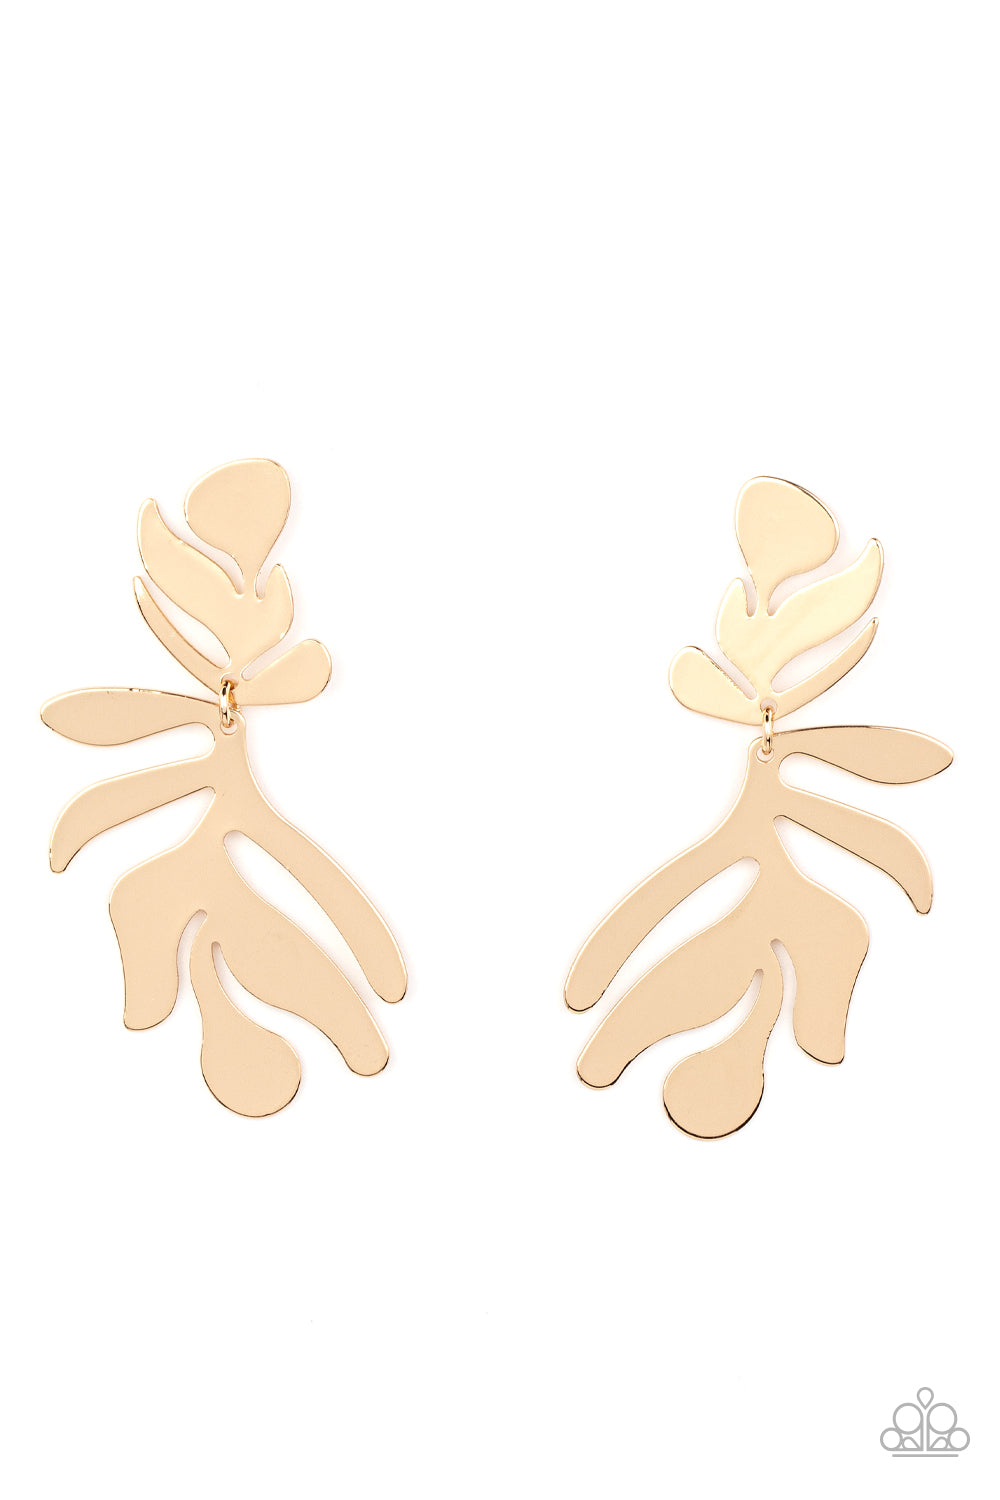 Paparazzi Accessories - Palm Picnic #E639 Bin - Gold Earrings